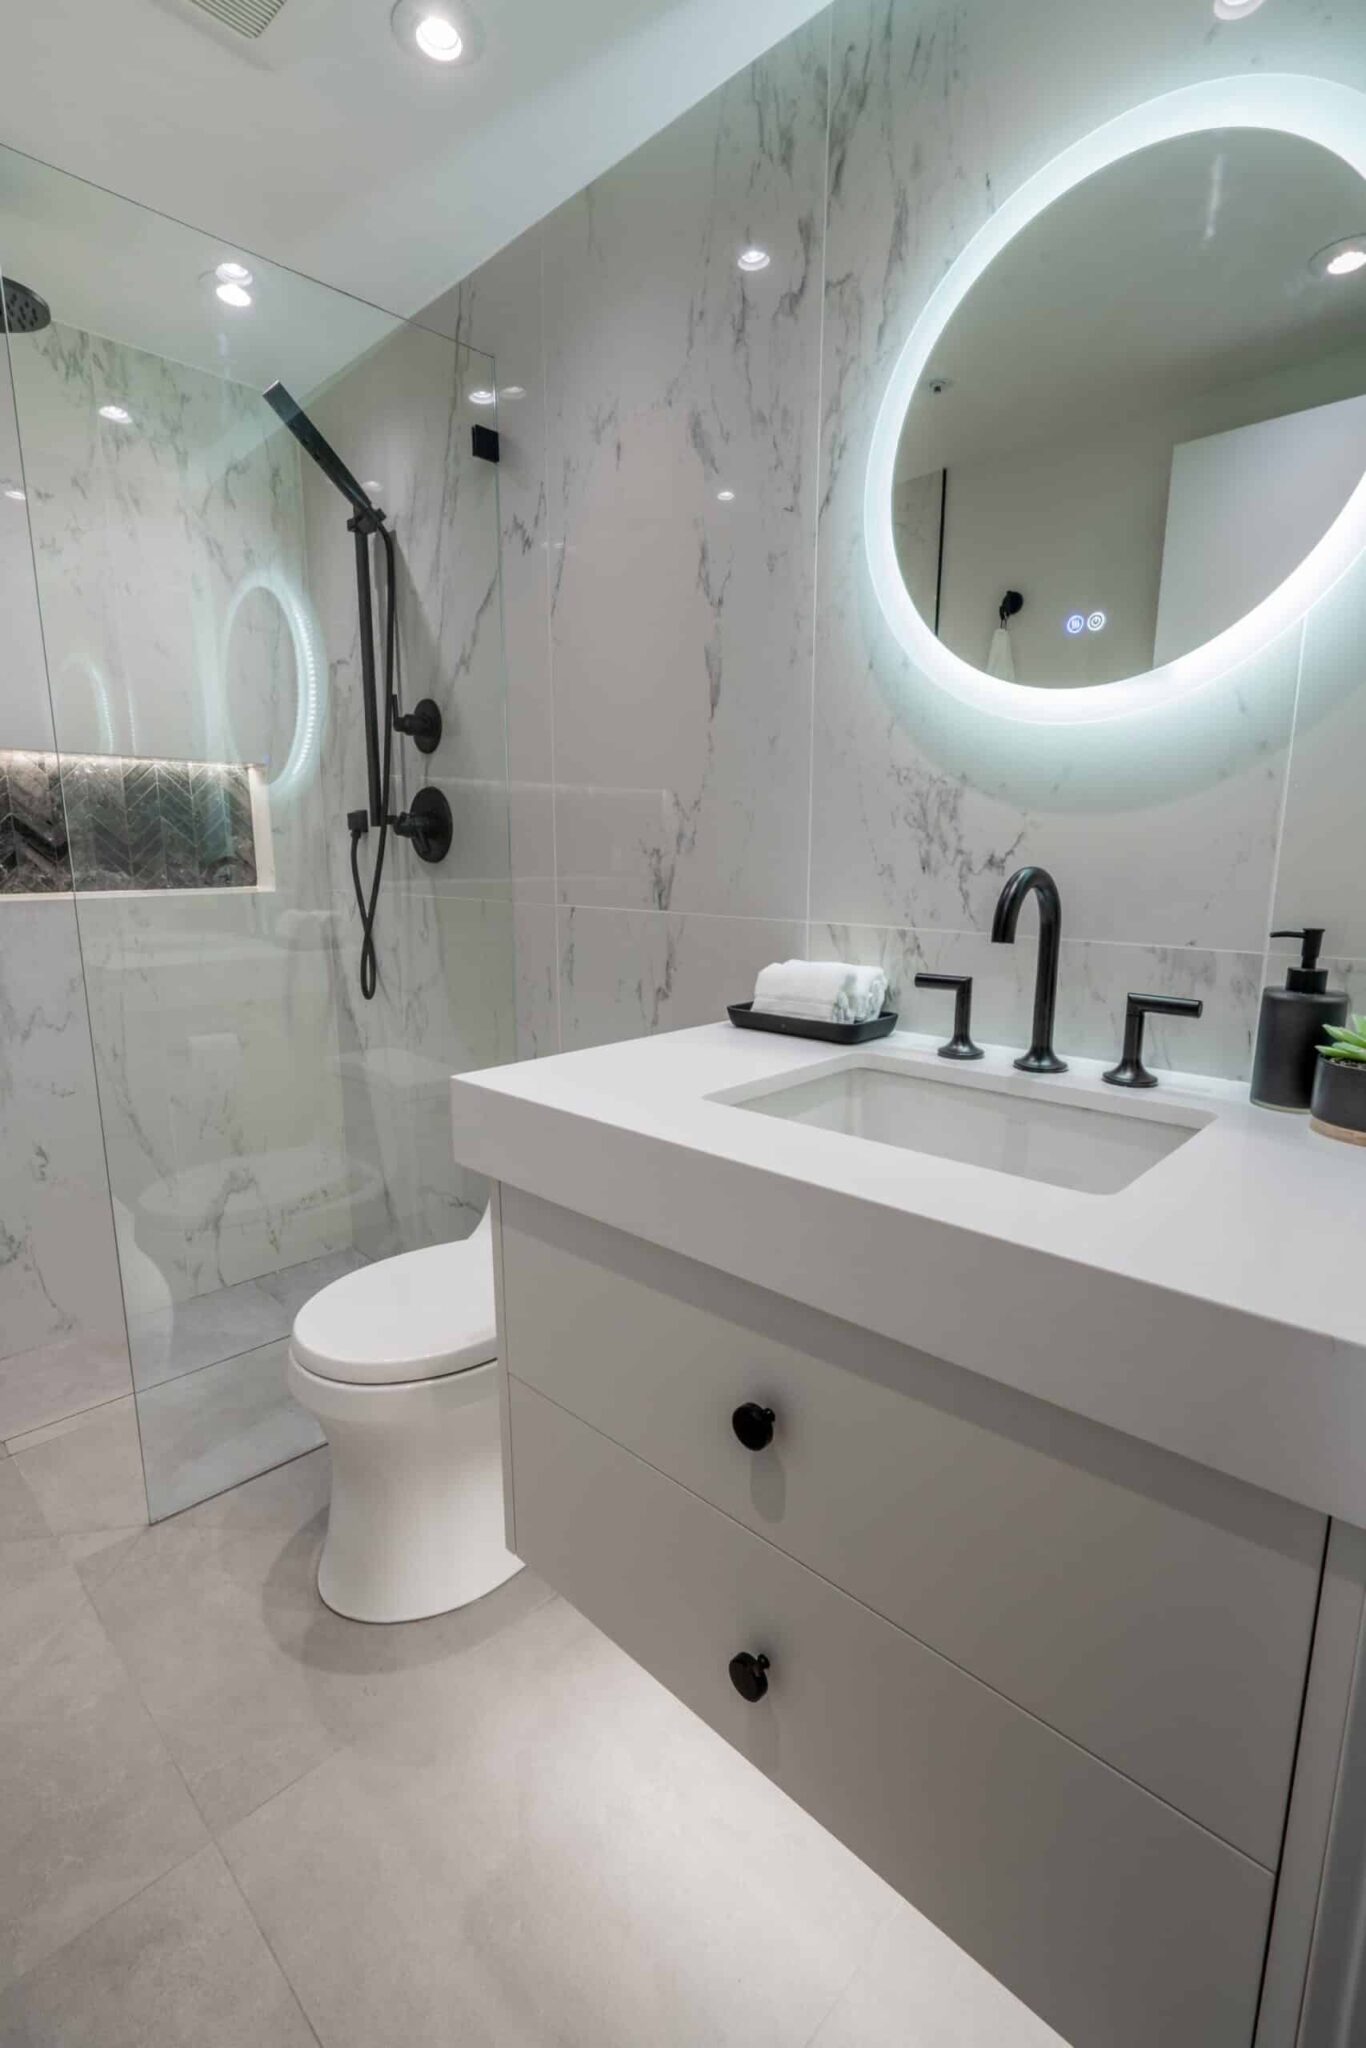 Bathroom-modern-remodel-round-led-mirror-black-plumbing-fixtures